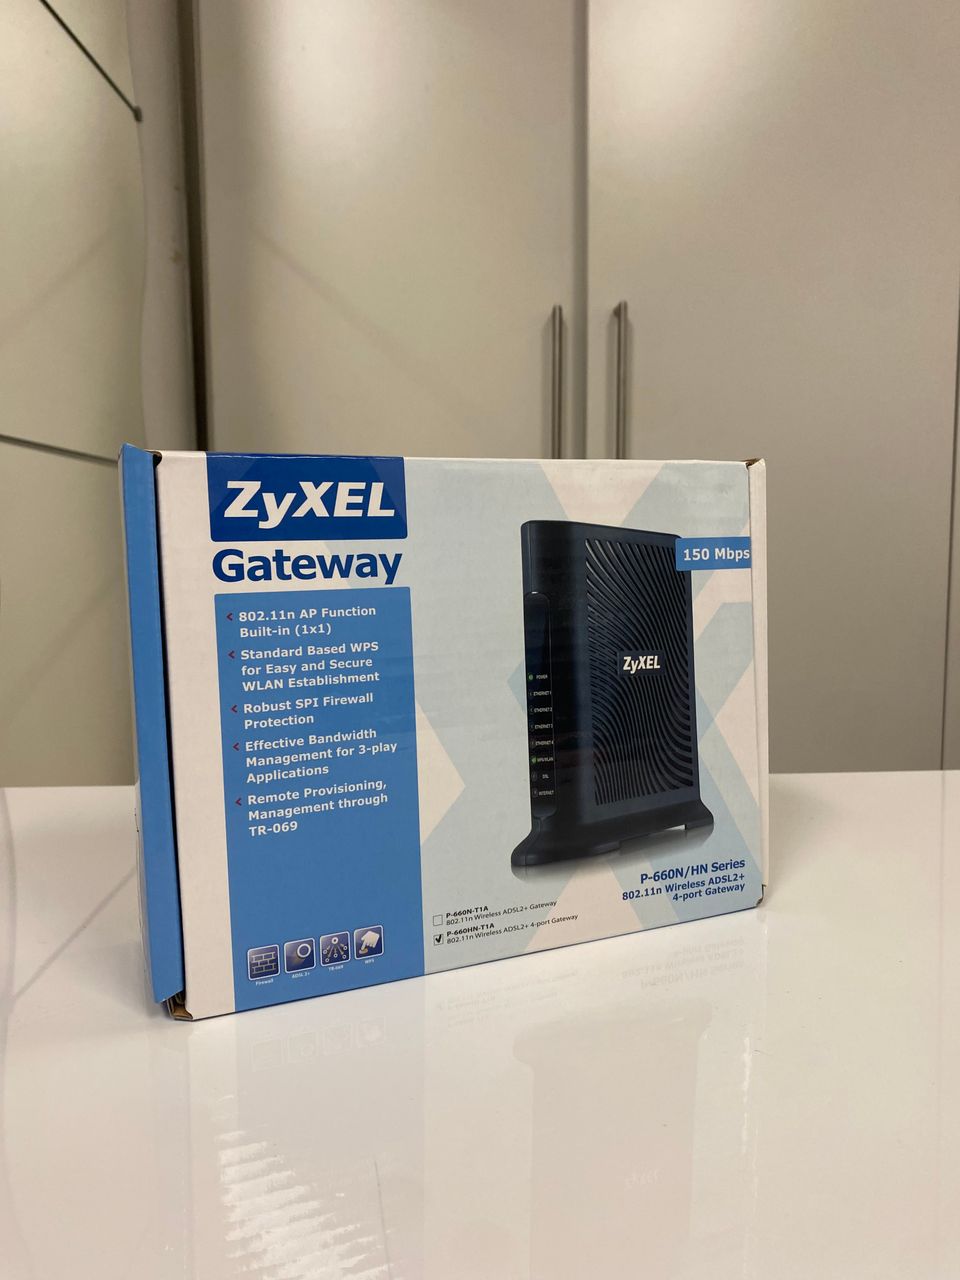 Zyxel Gateway P-660N/HN modeemi